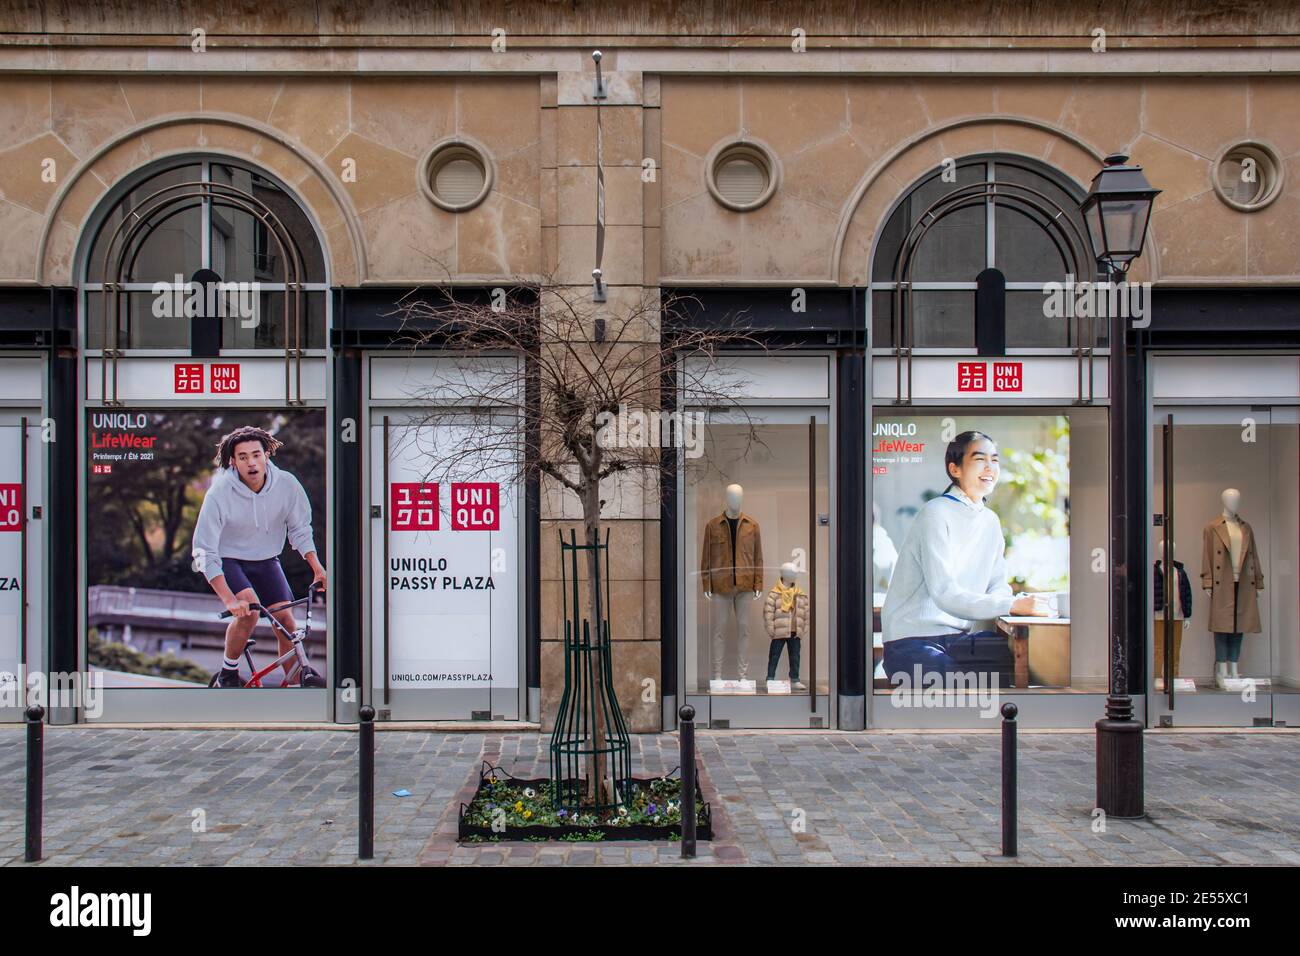 Uniqlo Store Paris Frankreich Stockfotografie - Alamy